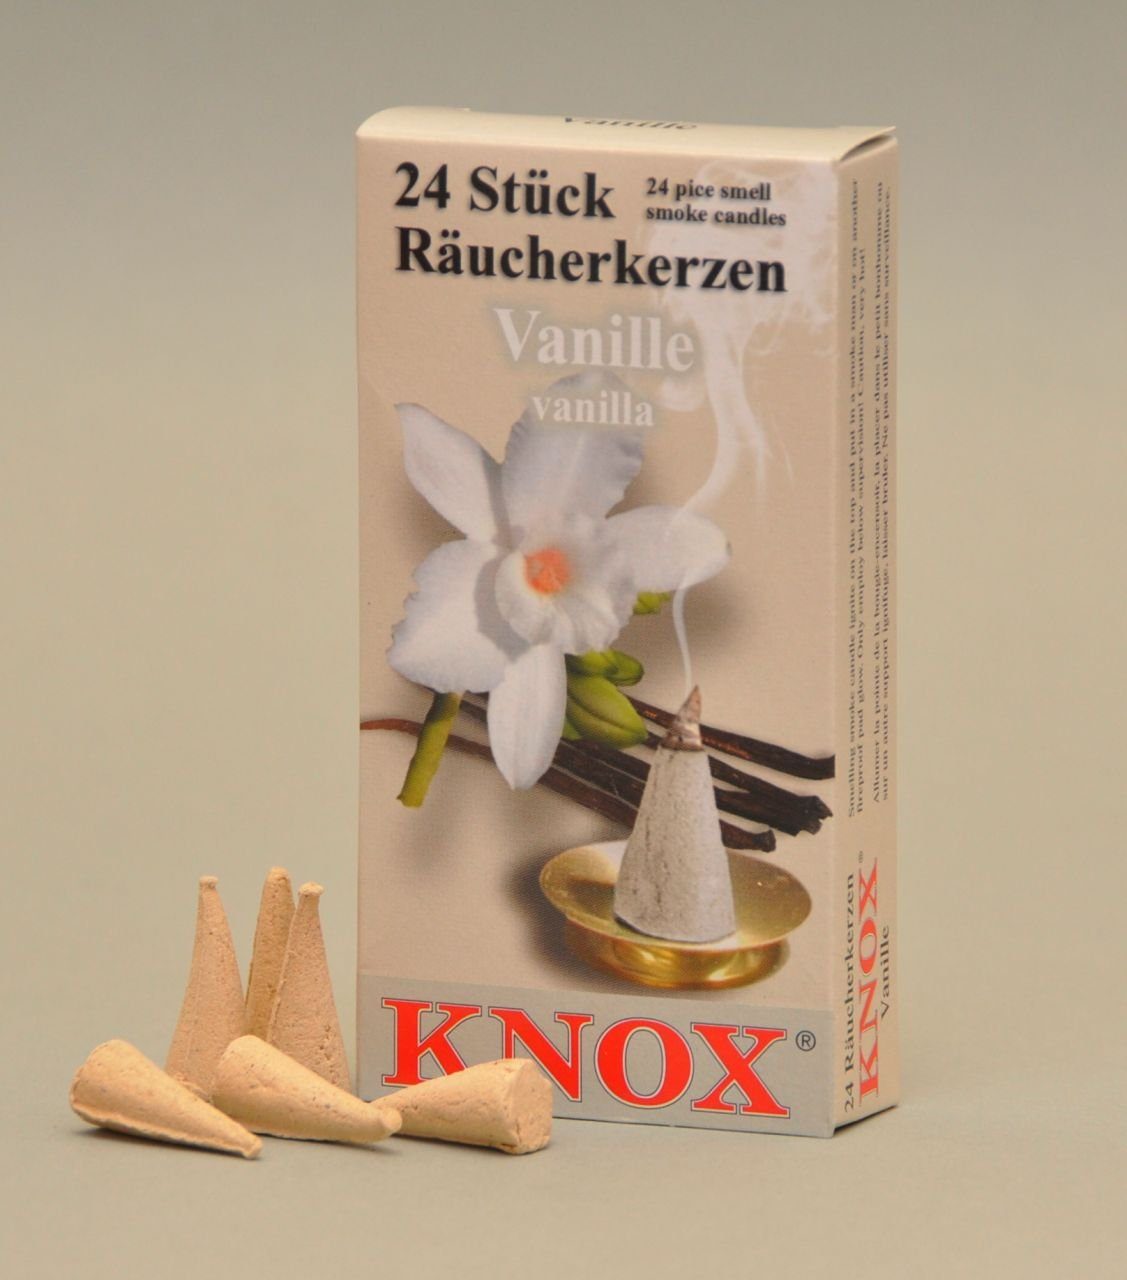 KNOX Räucherhaus Knox Räucherkerzen - 24 Vanille Stück